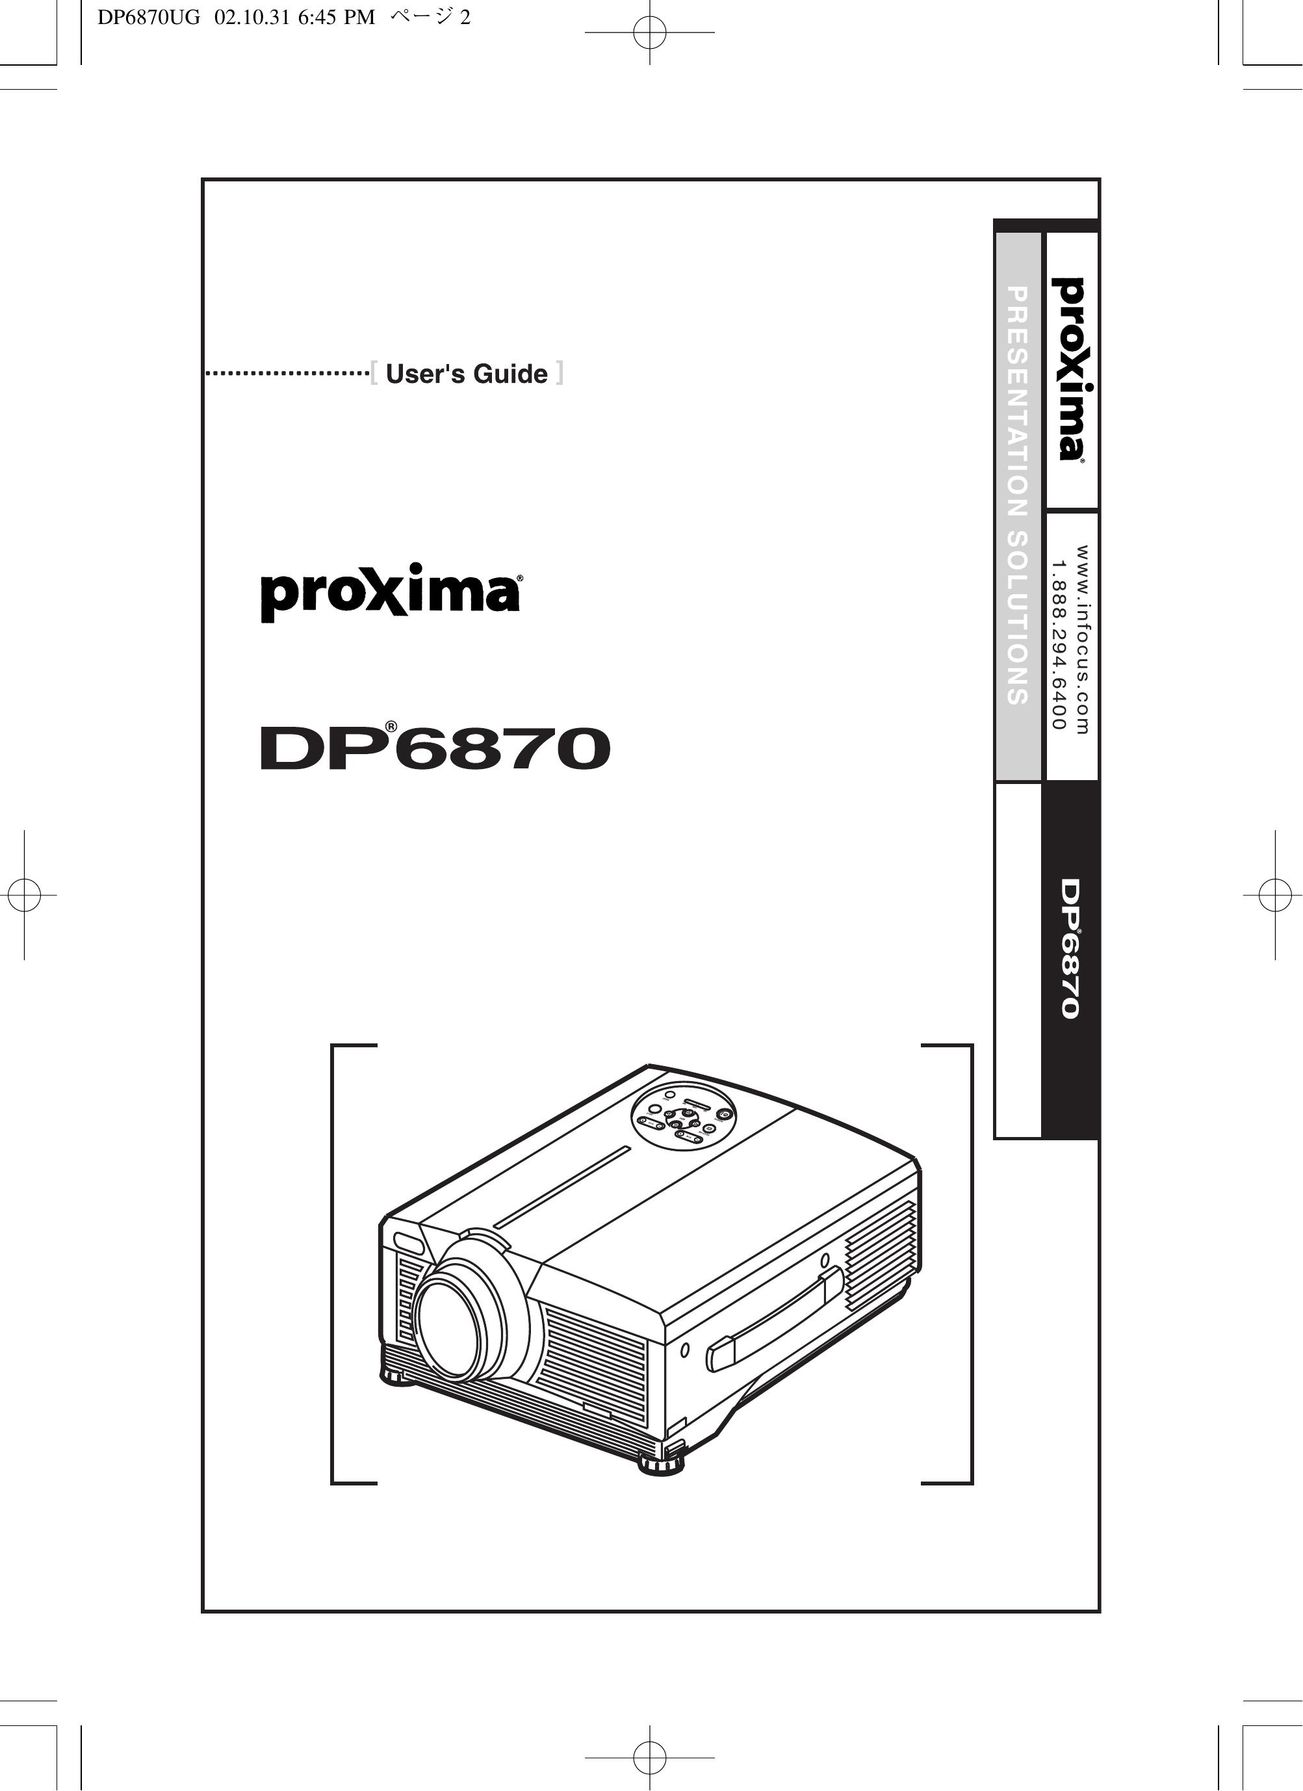 Proxima ASA DP6870 Projector User Manual